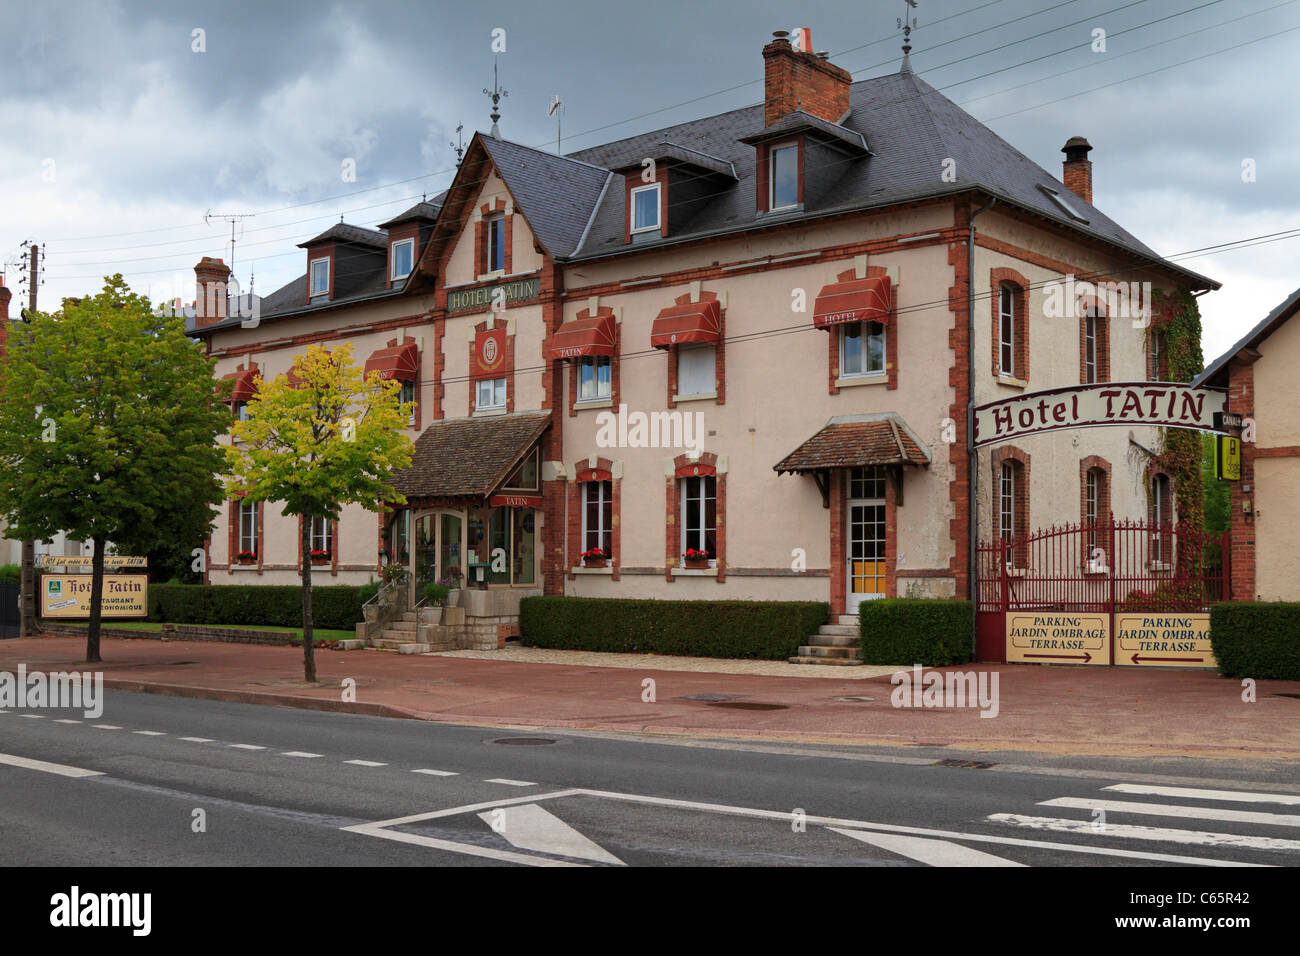 Hotel Tatin where Tarte Tatin was first created in 1889, Lamotte Beuvron, Sologne, France. Stock Photo